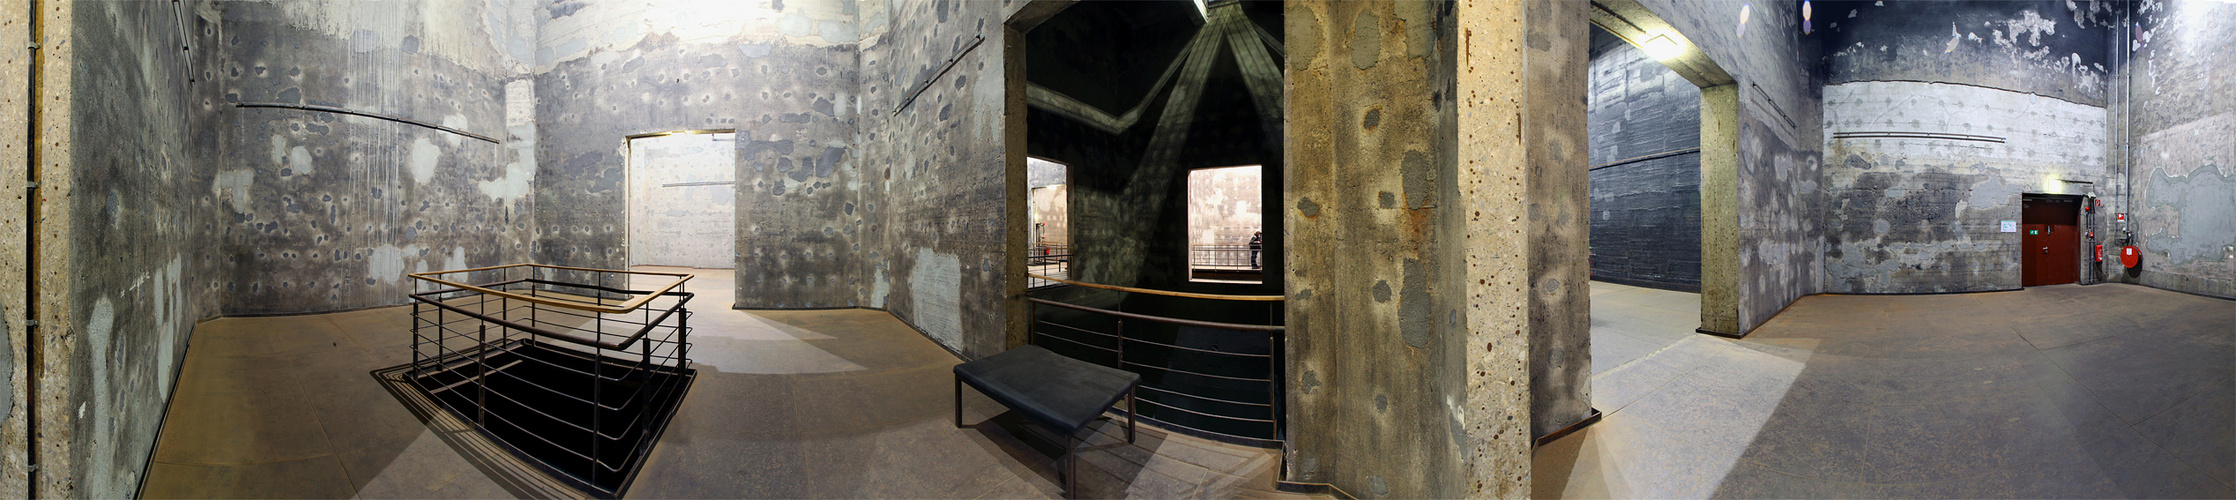 Kokskohlebunker Kokerei Zollverein 360 Grad Movie